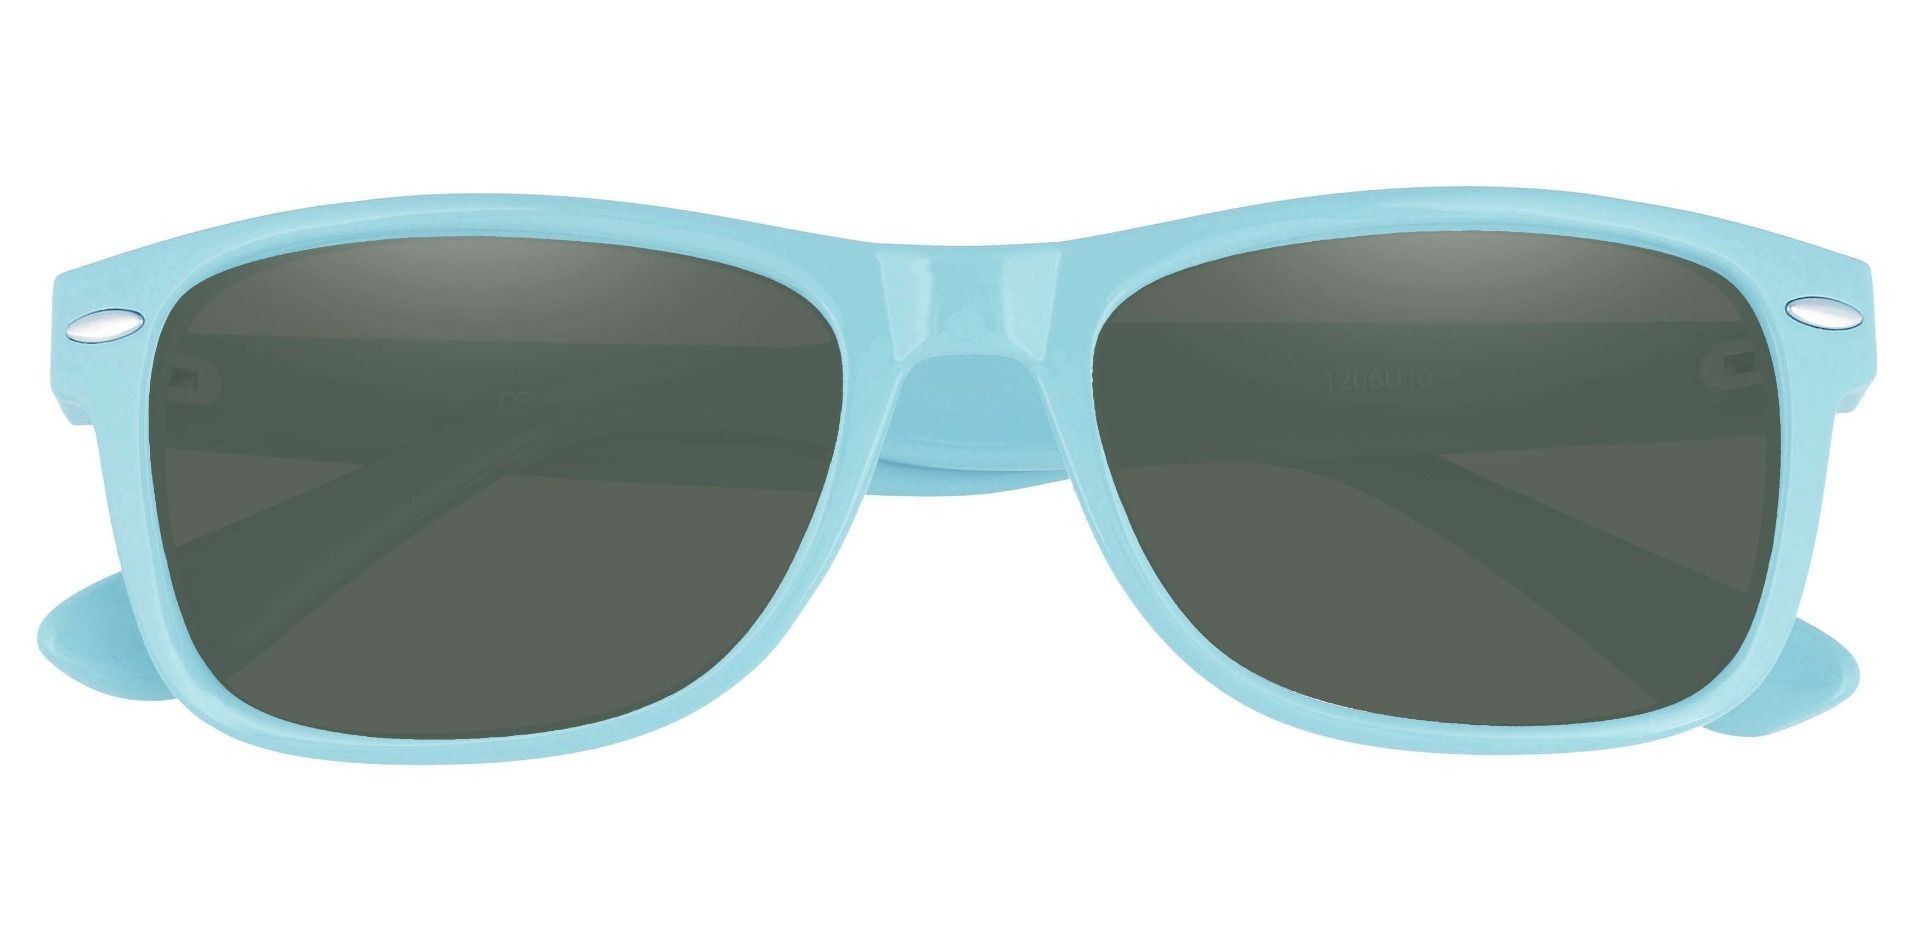 Kent Rectangle Prescription Sunglasses - Blue Frame With Green Lenses